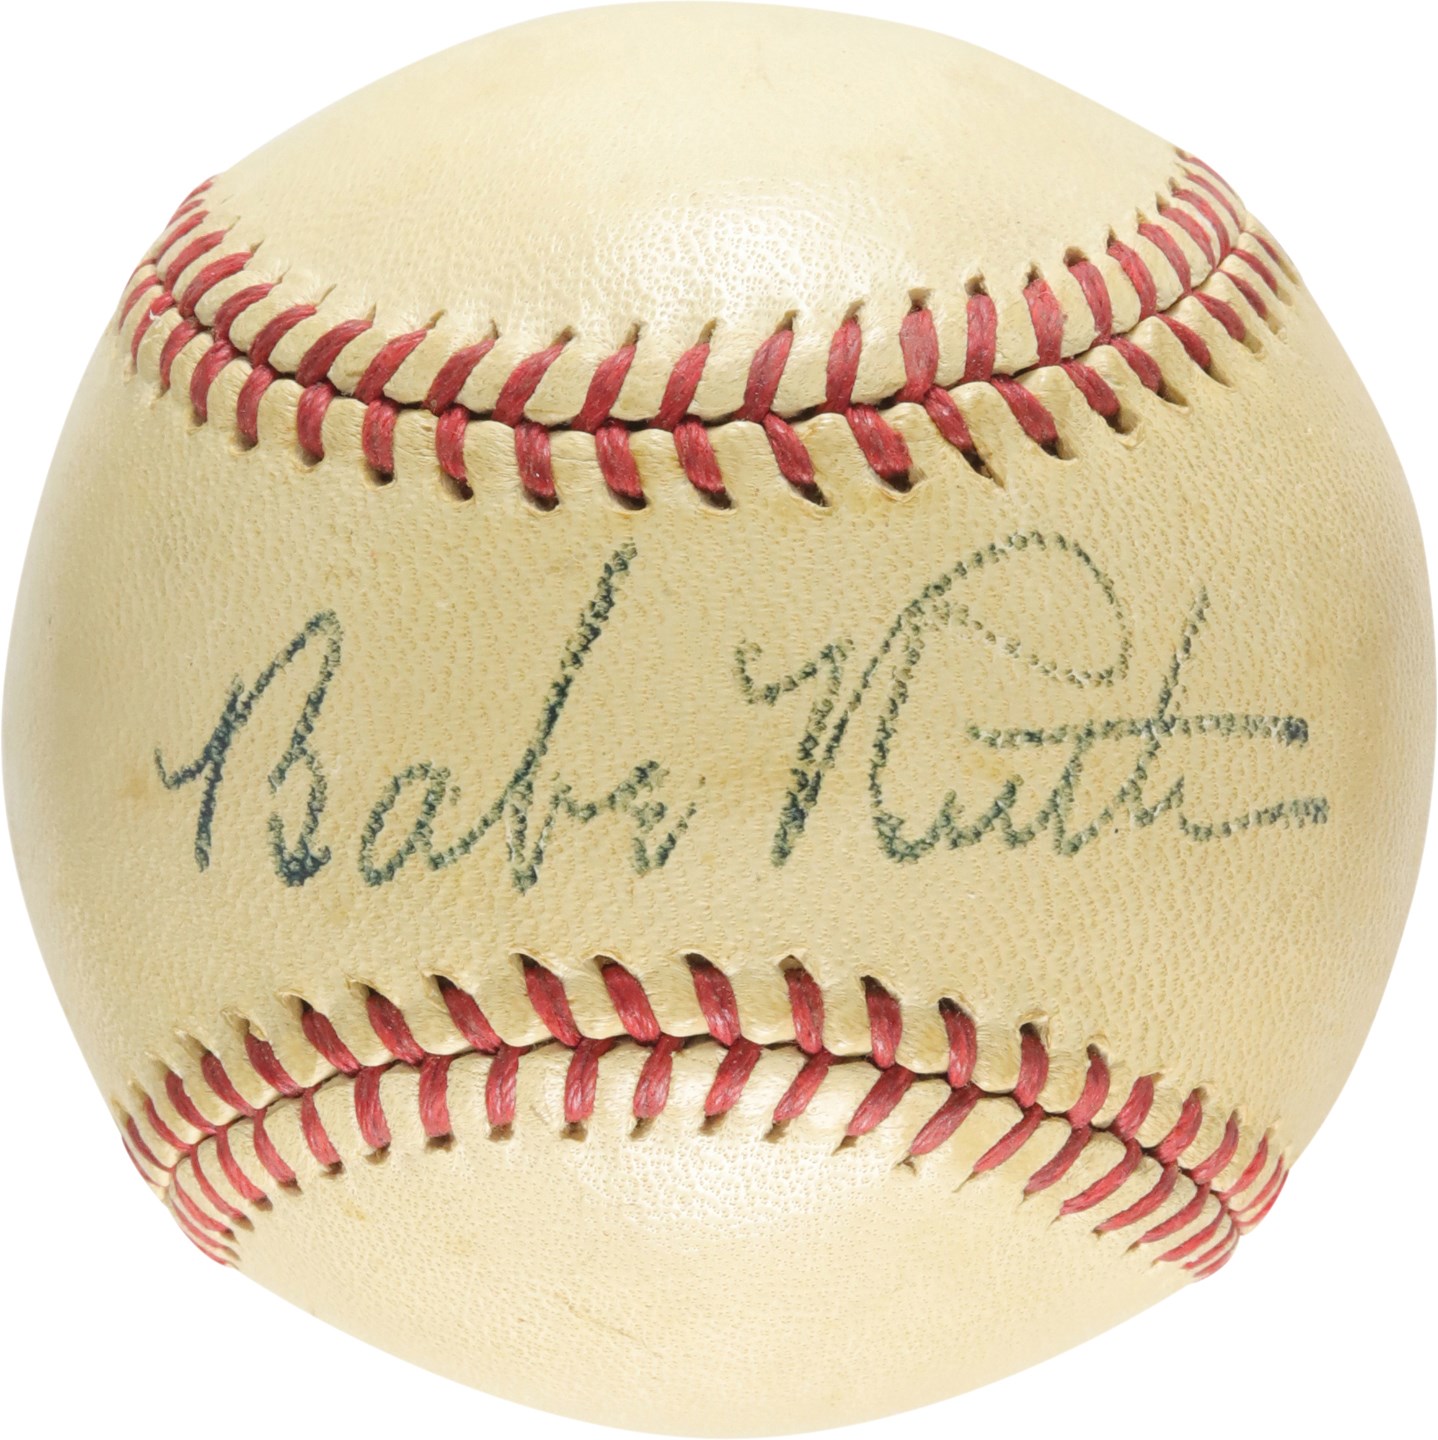 tstanding Babe Ruth Single-Signed Baseball (PSA)